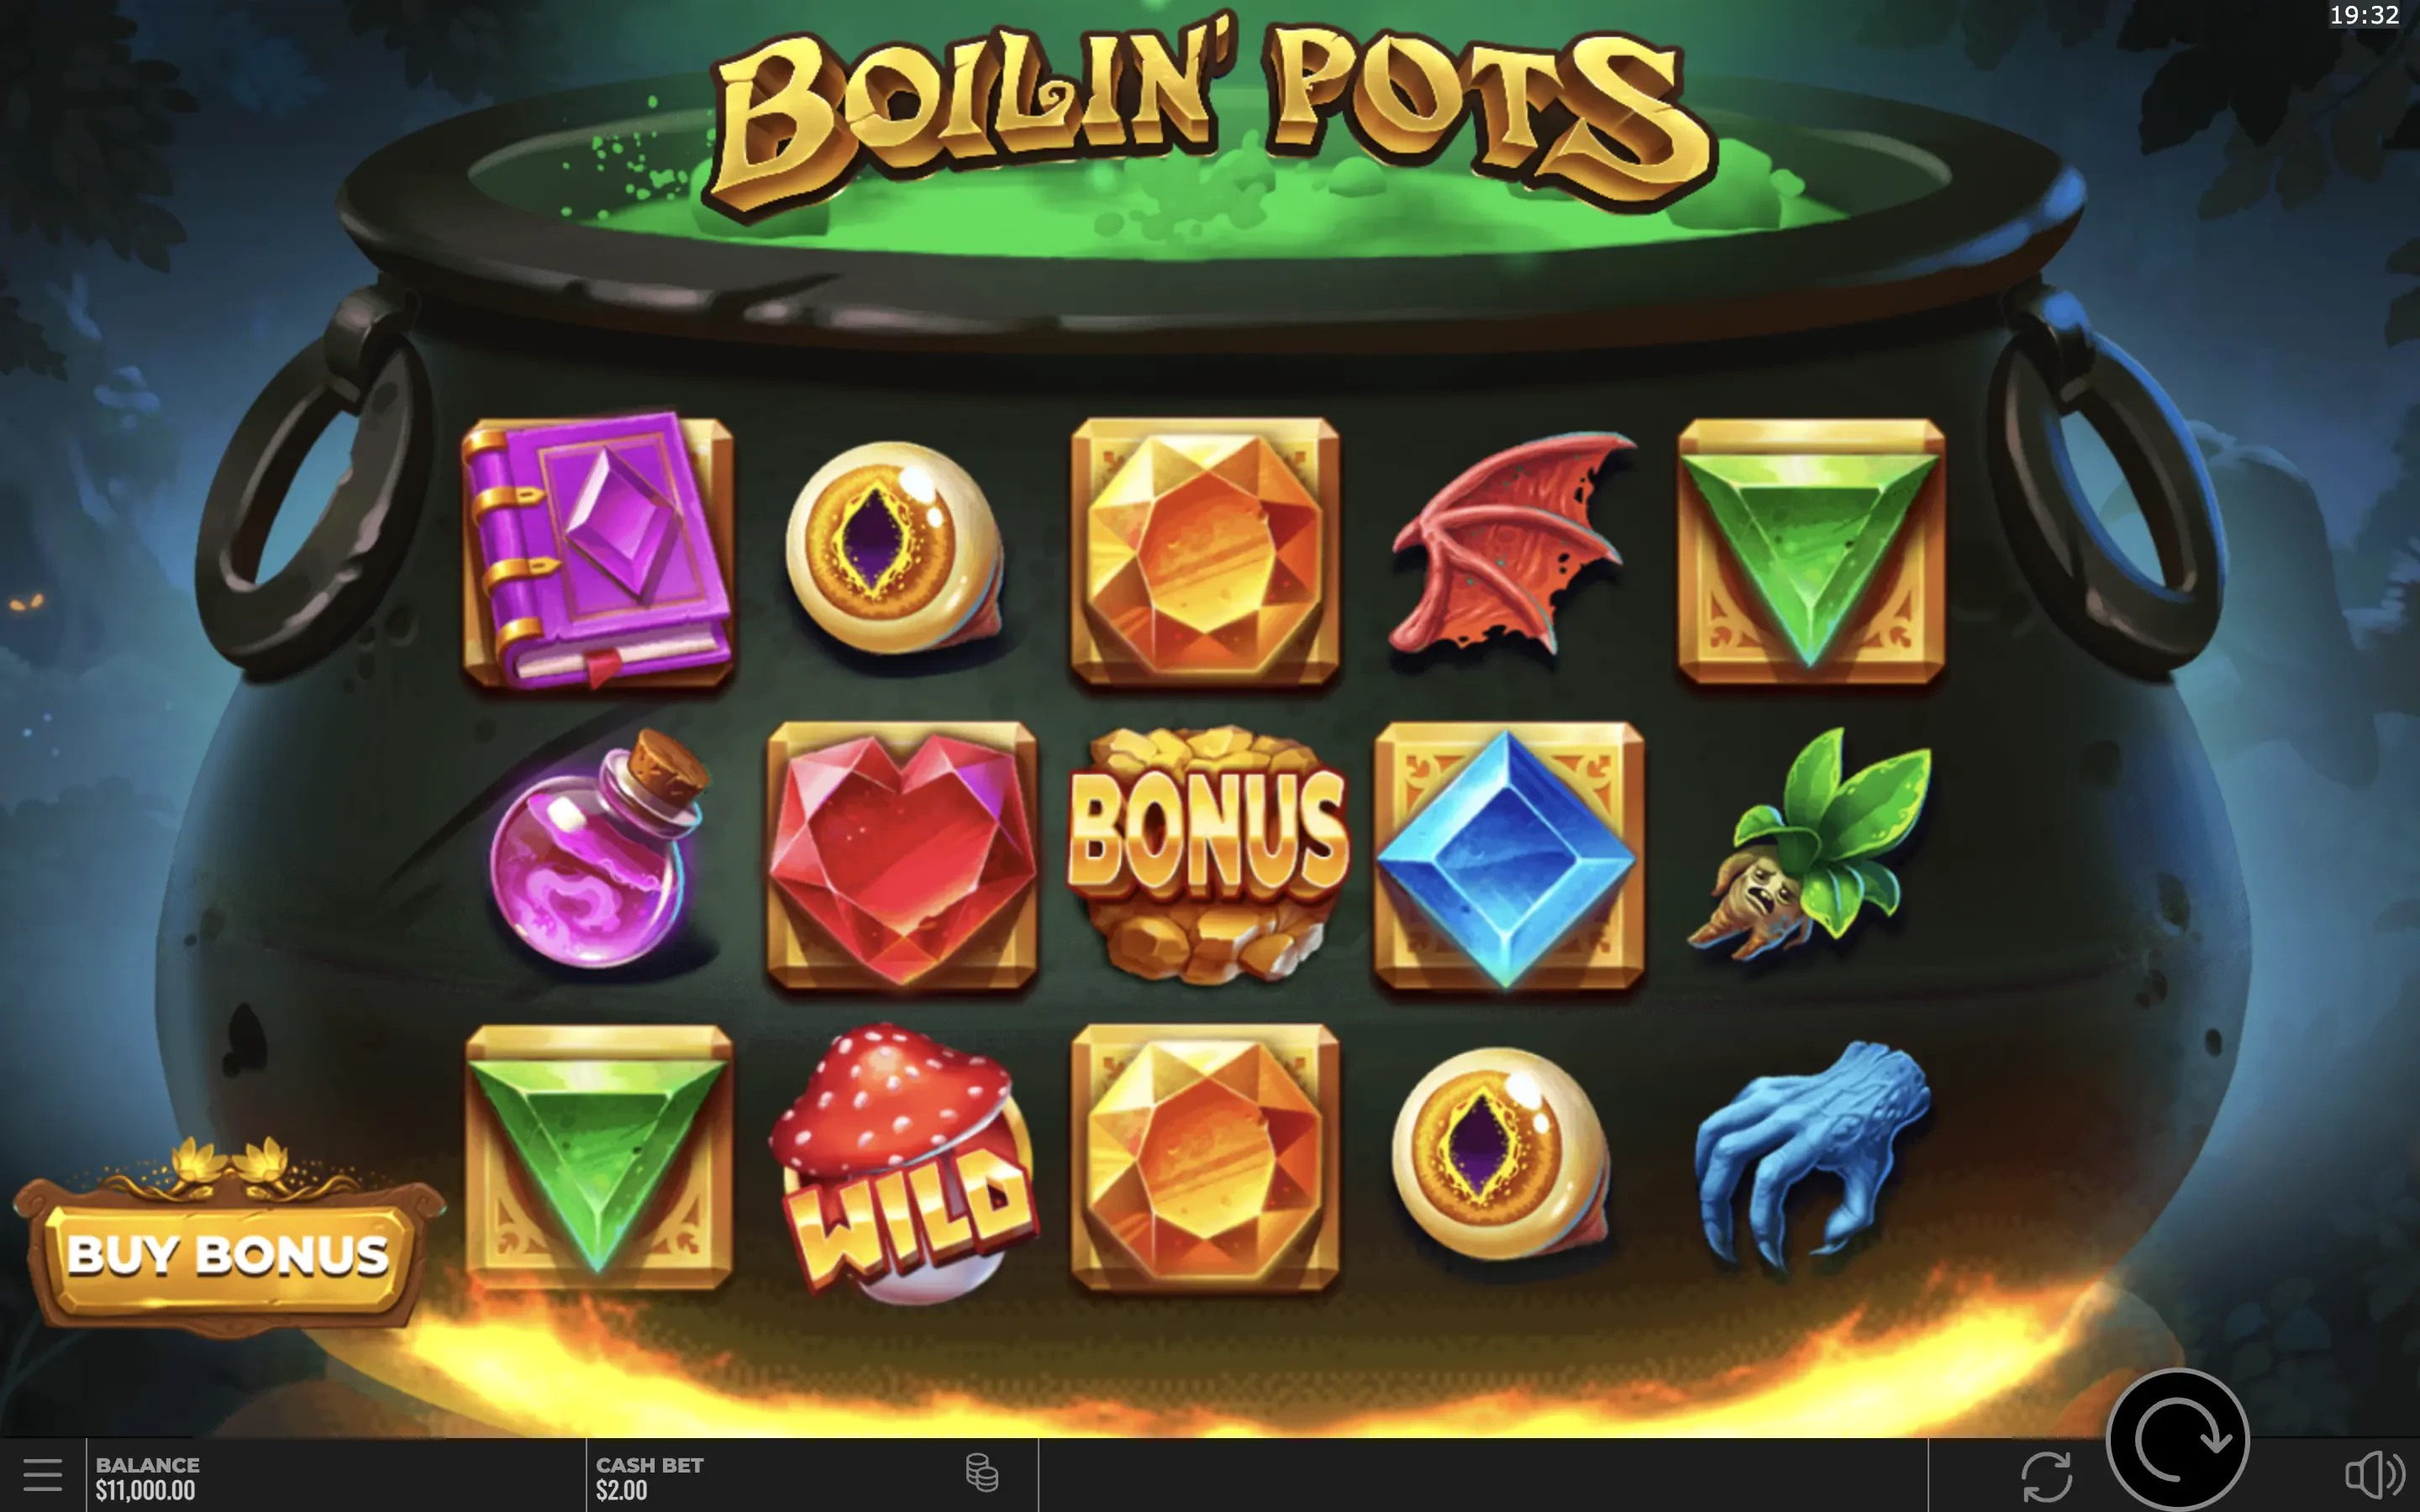 The Boilin' Pots slot machine by Yggdrasil